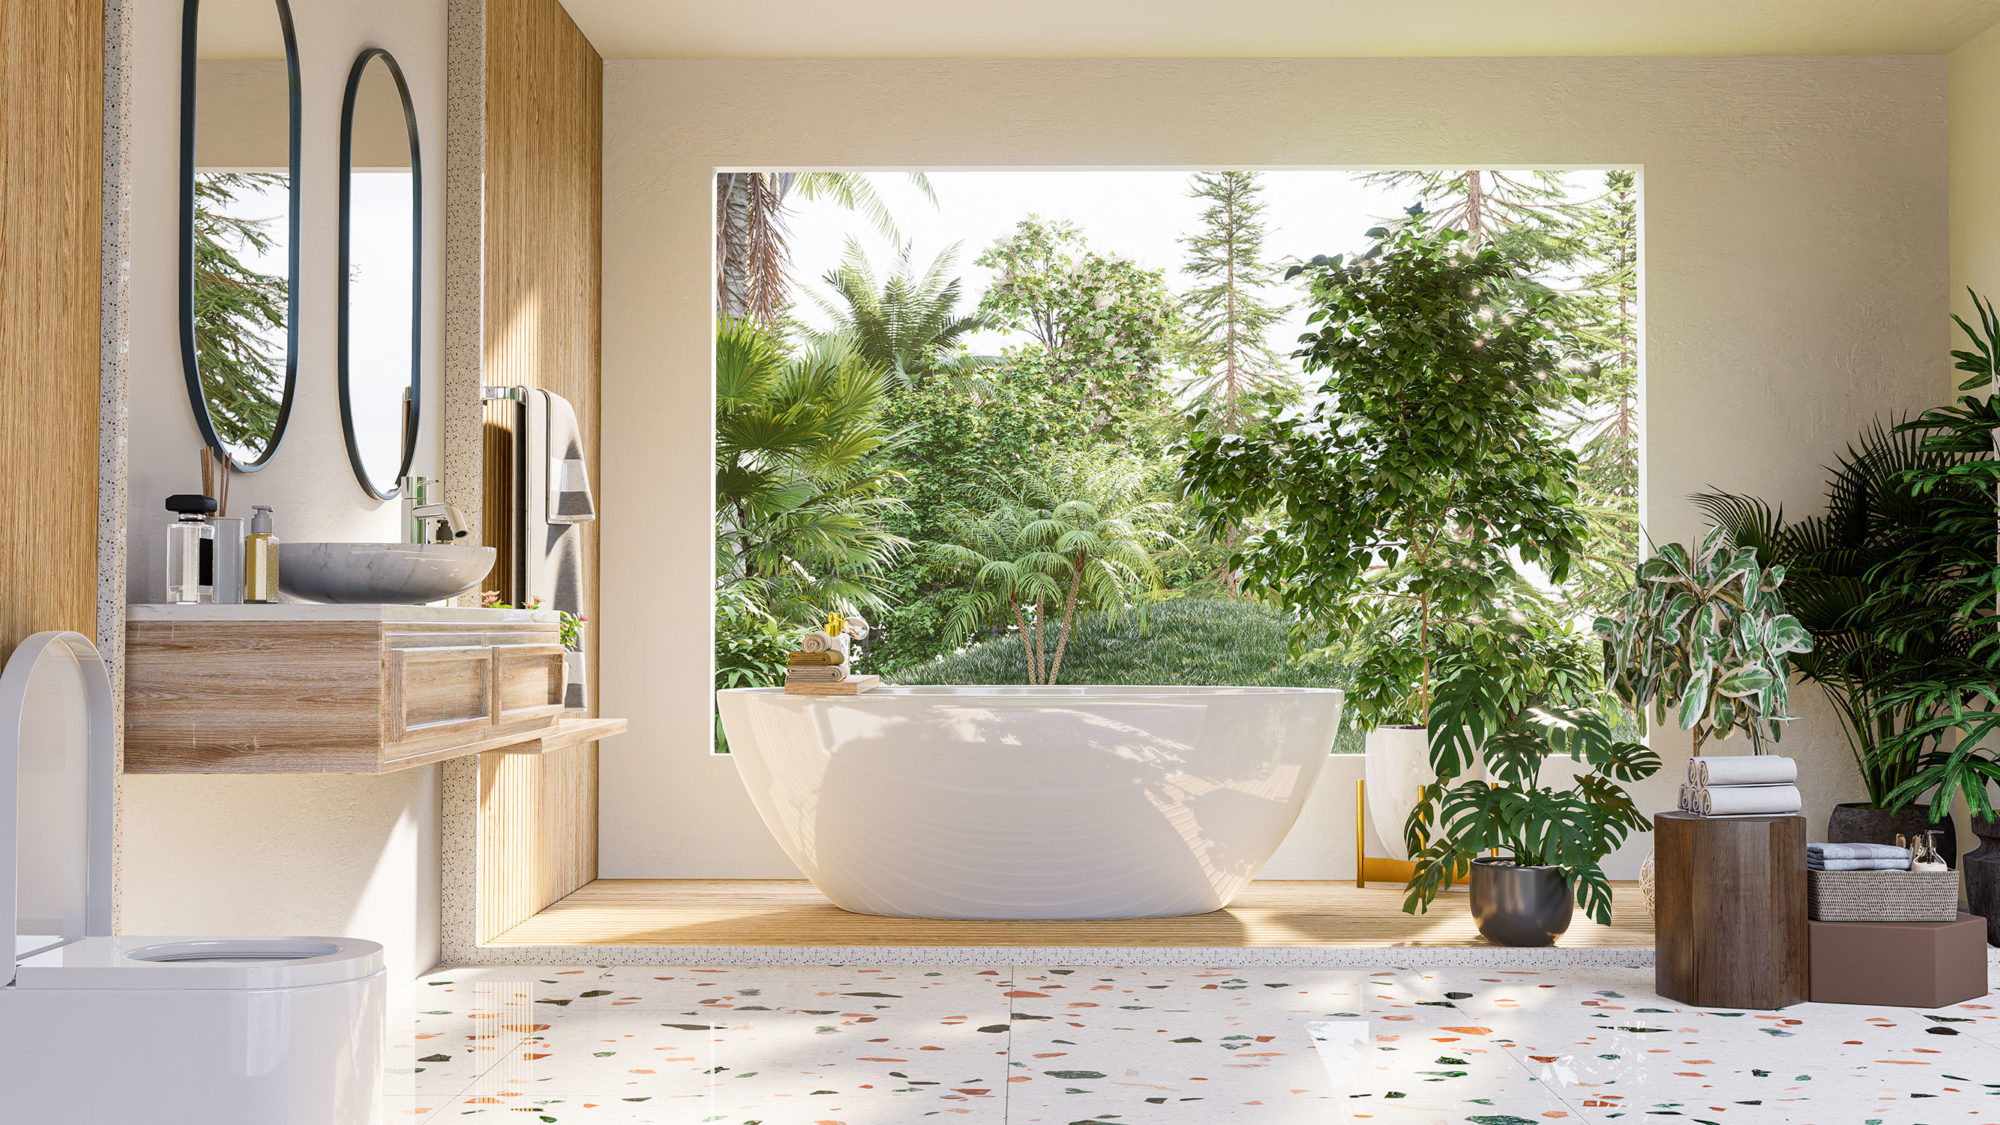 40 Spa Bathroom Ideas for Your Home